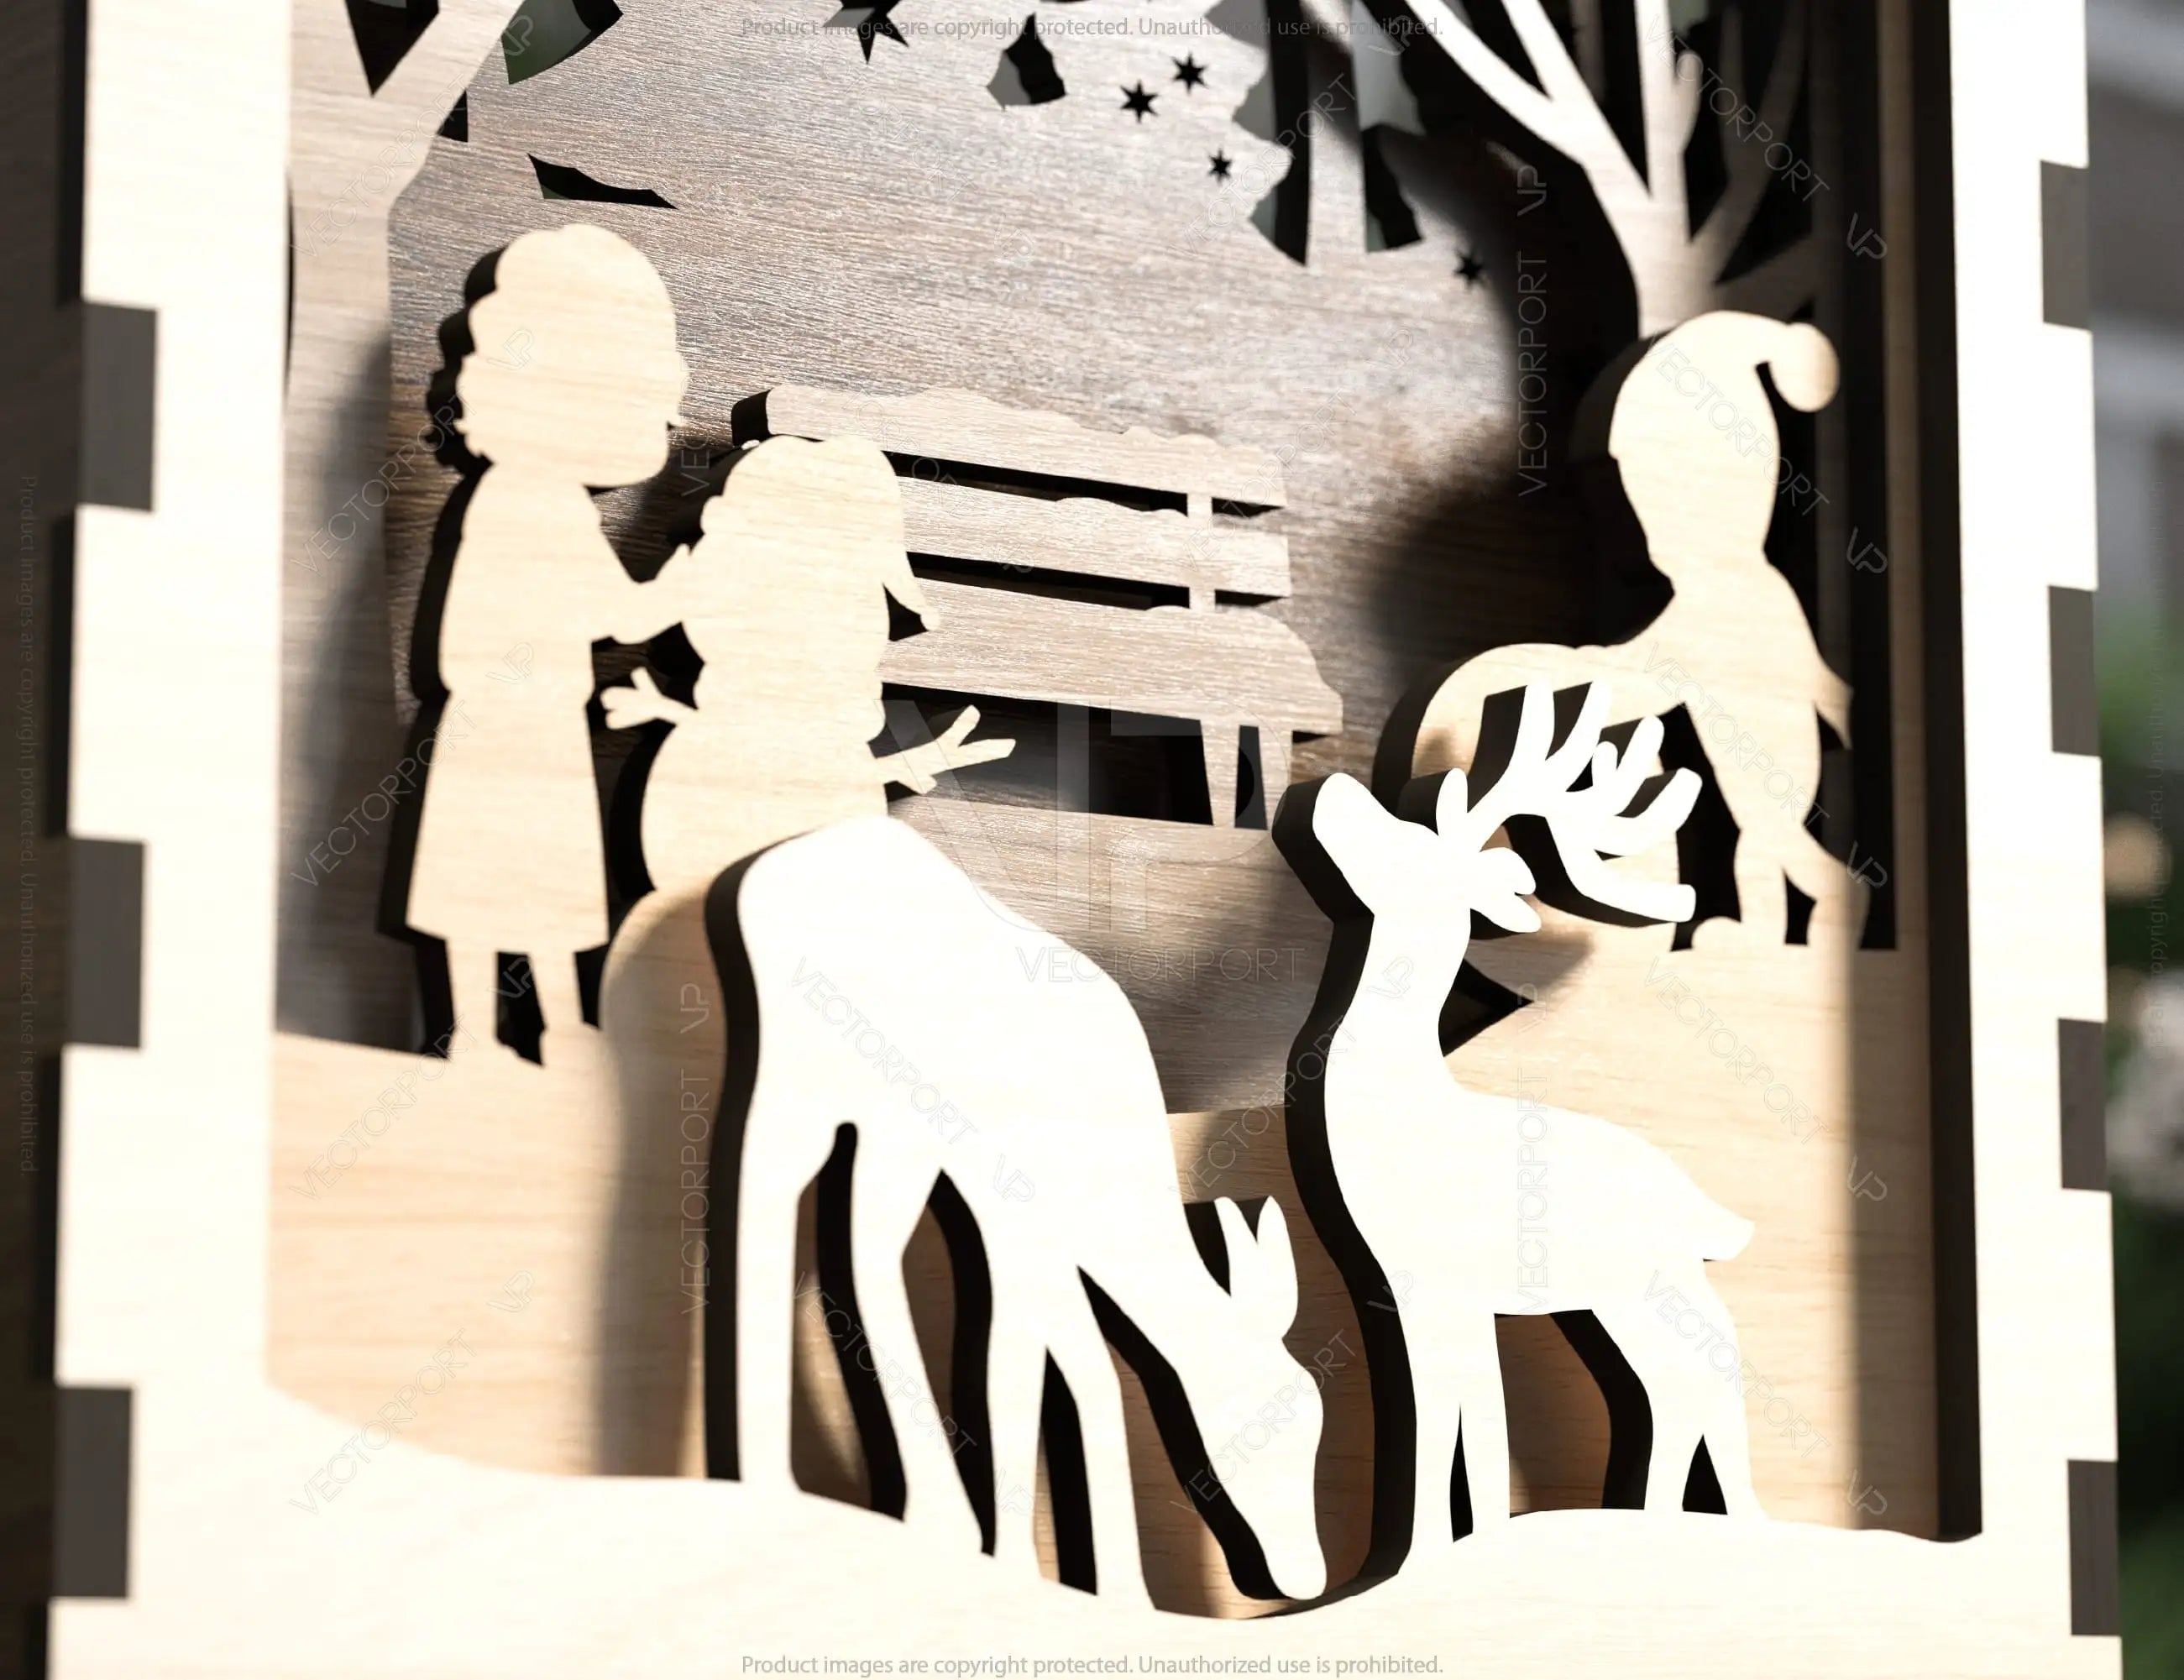 Christmas Multilayer Christmas Gift Ornament Snowman Deer Forest Scene Decorative Wooden Layered Digital Download |#U344|